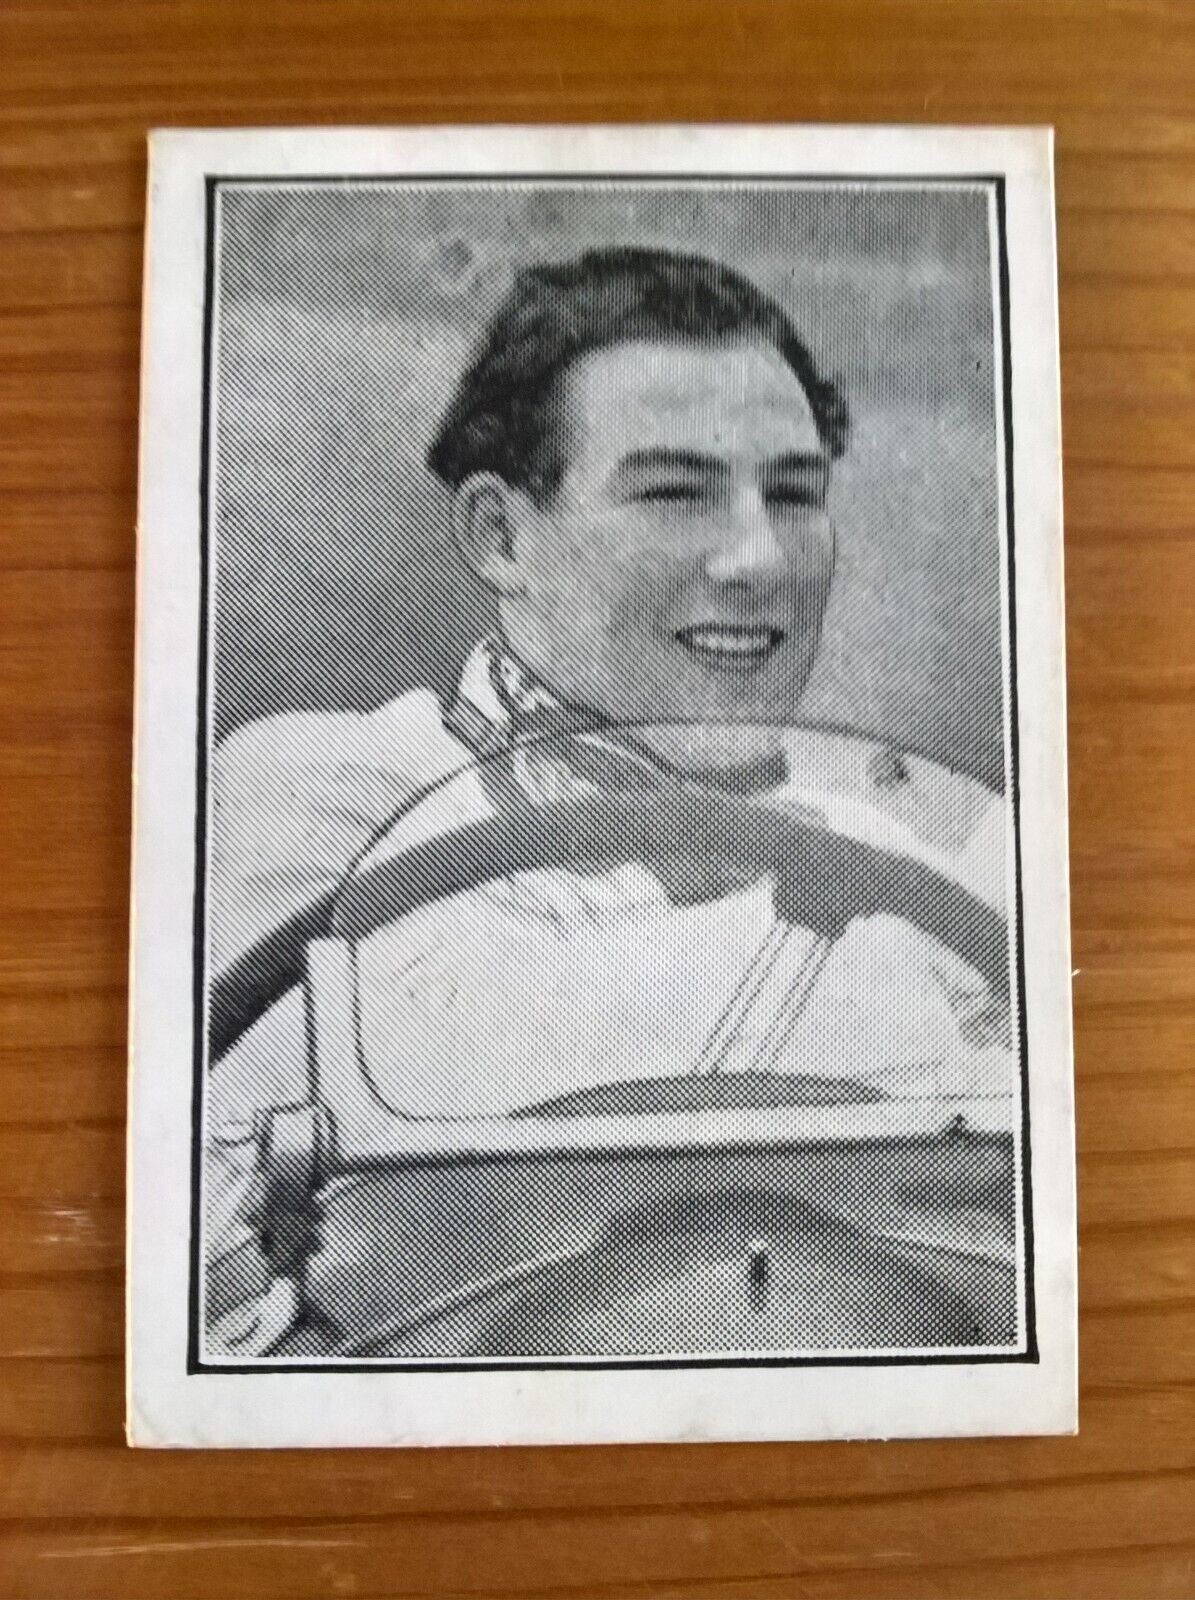 Barratt trade card: Fastest on Earth # 20 Stirling Moss rookie 1953 Motor Racing